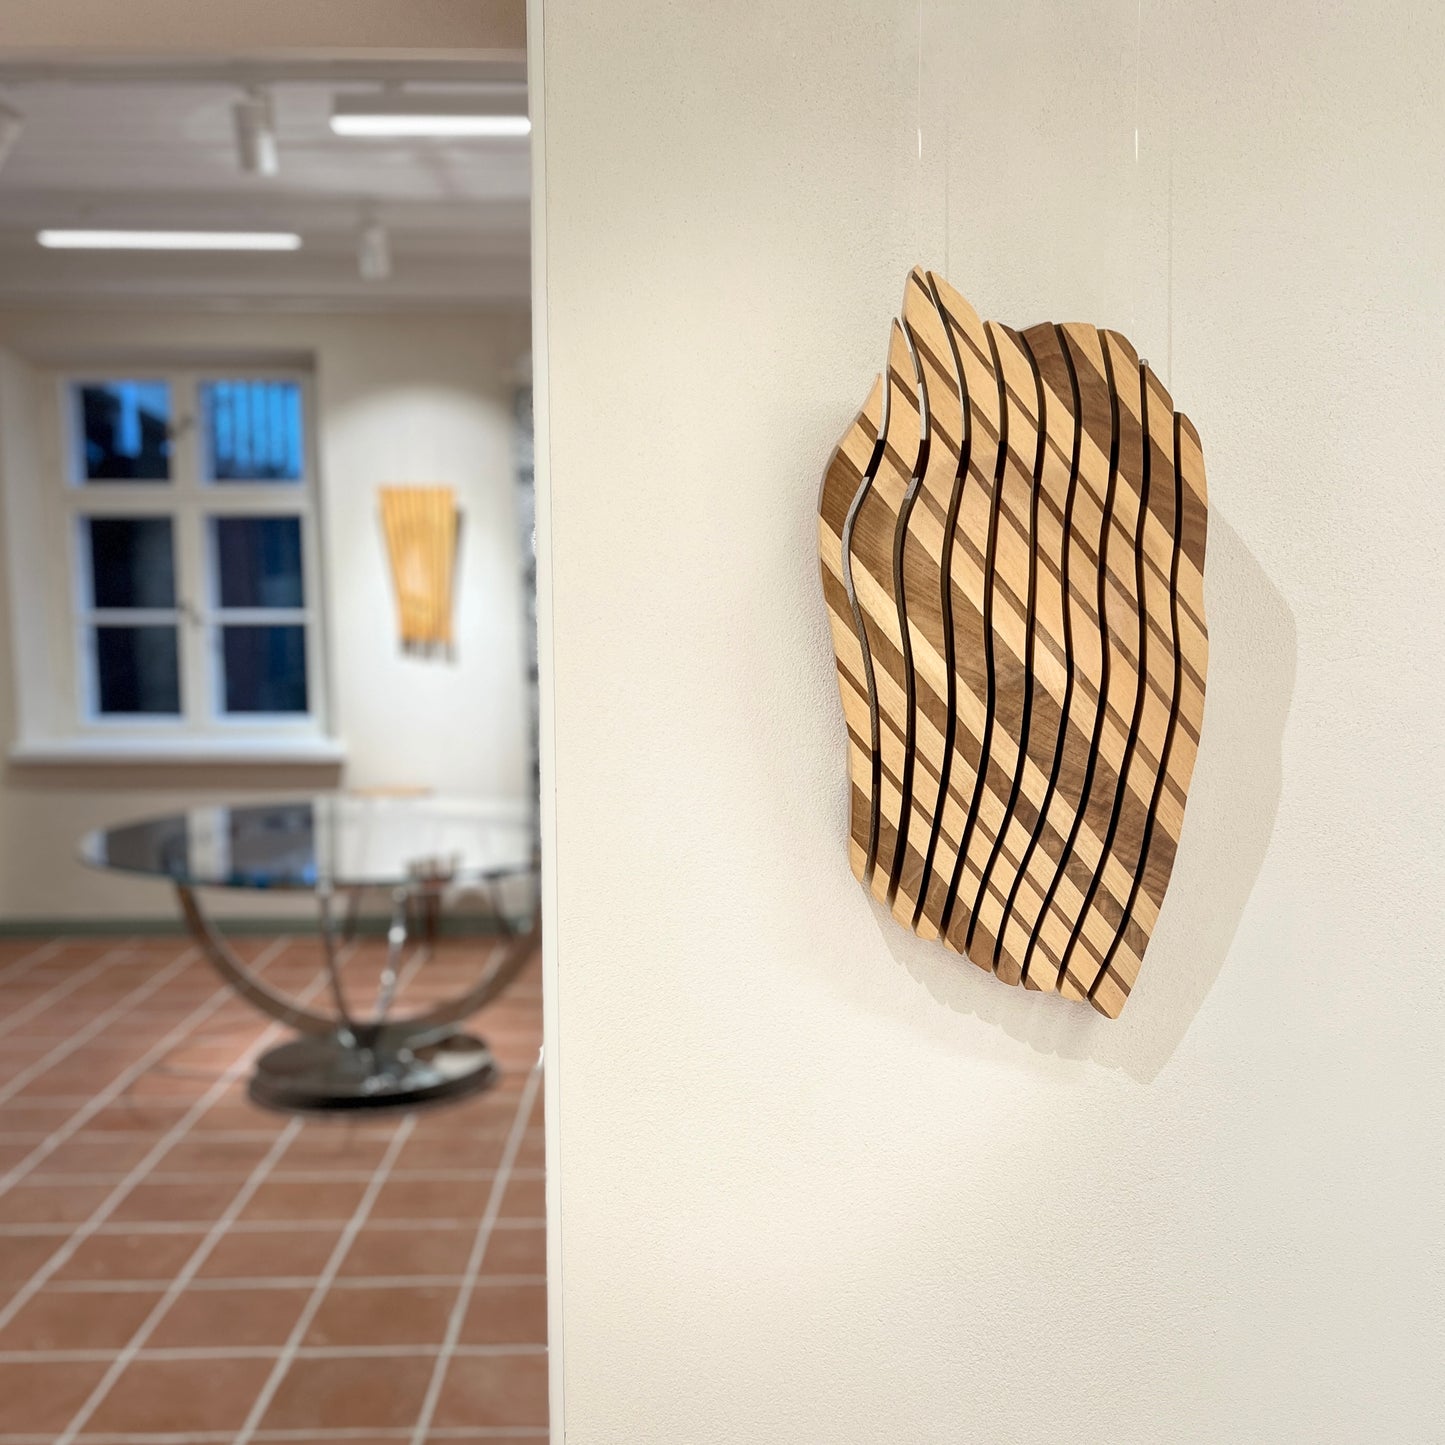 Lasse Kinnunen timber object